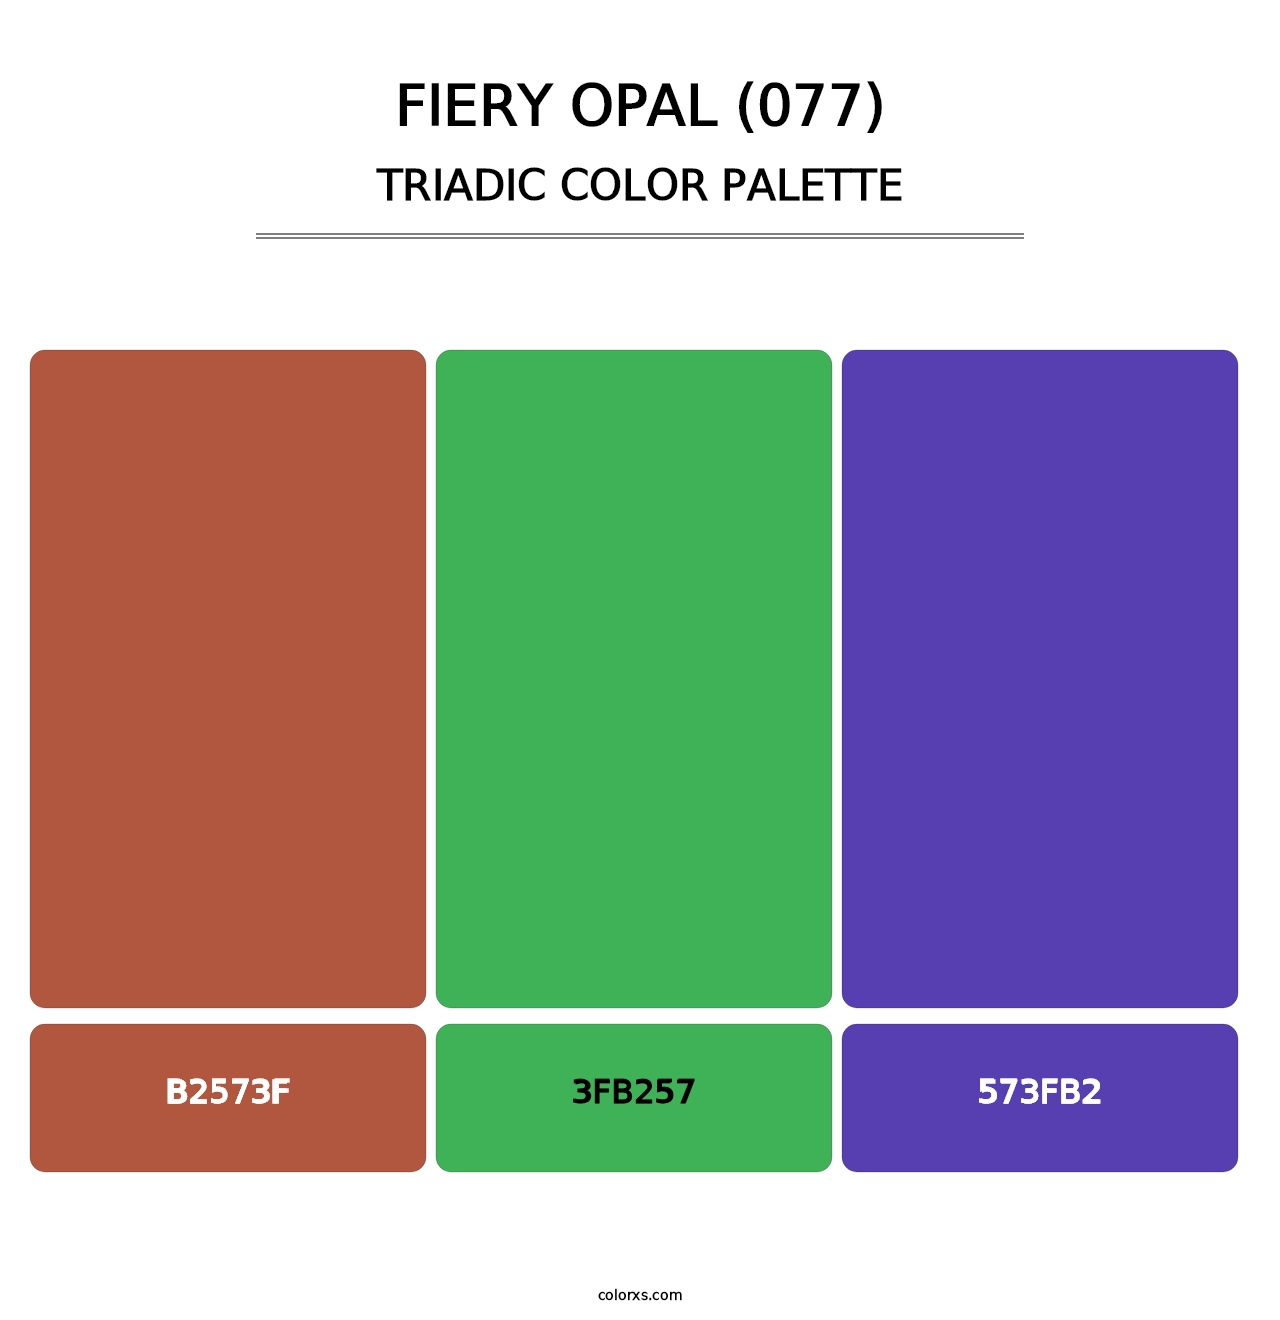 Fiery Opal (077) - Triadic Color Palette